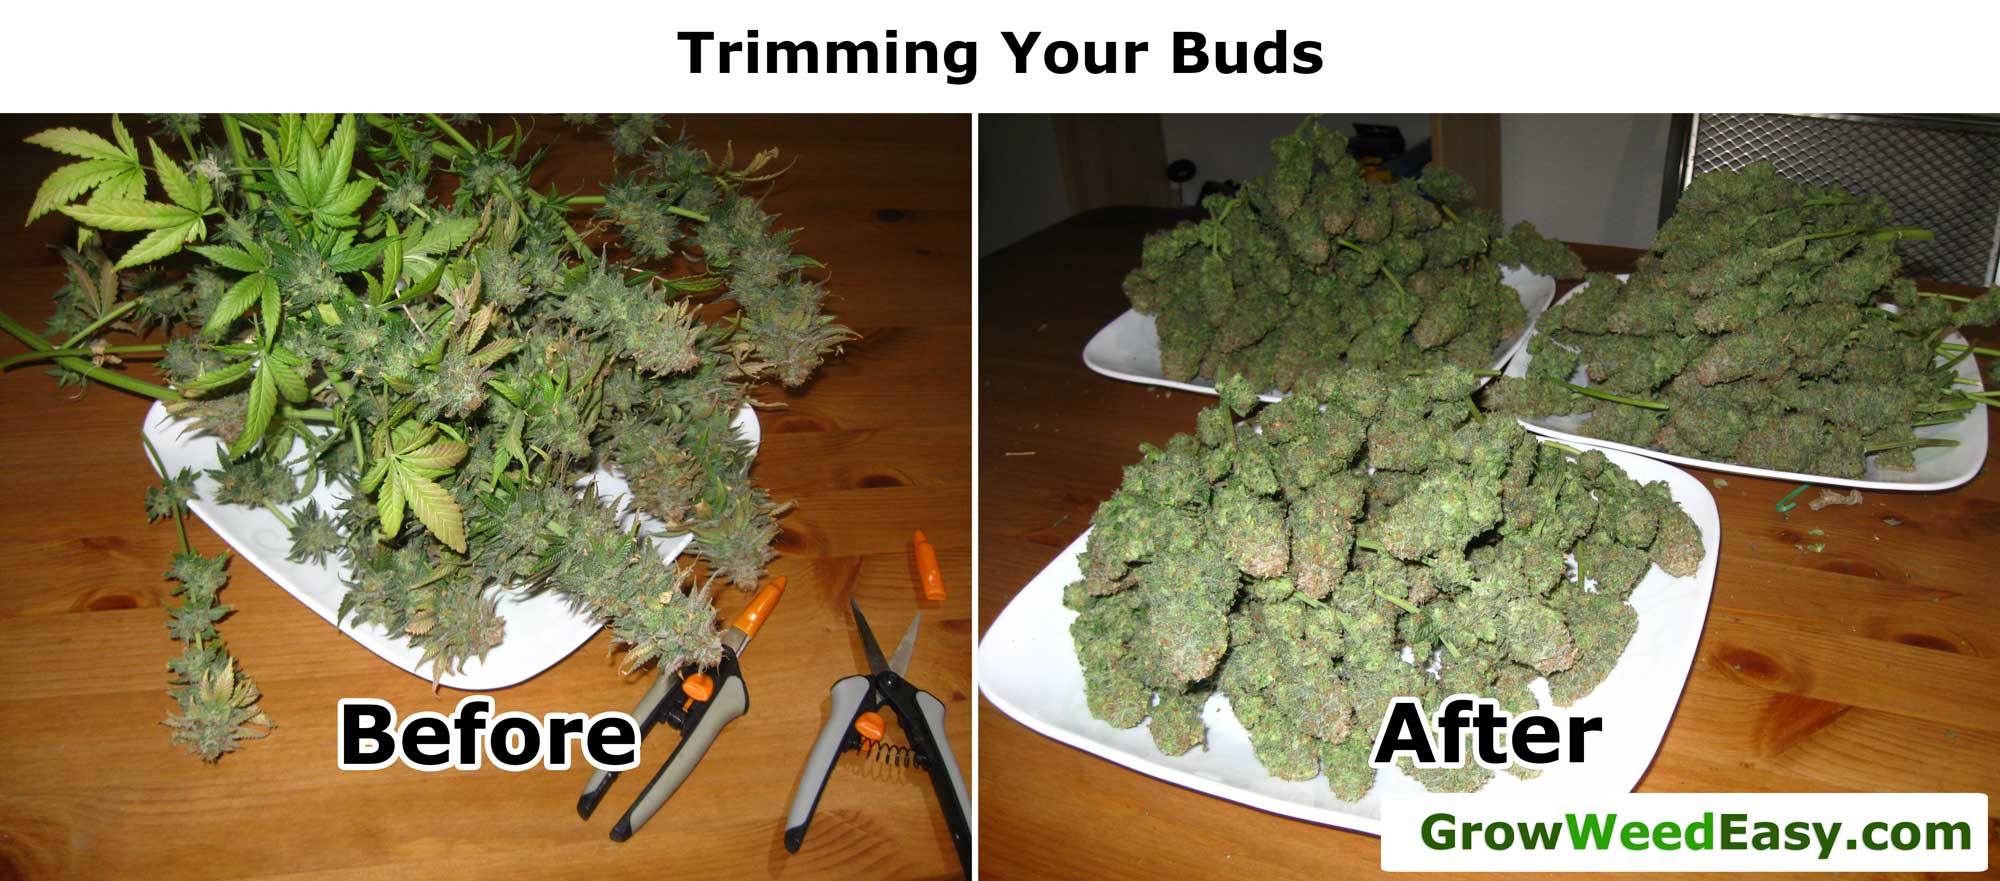 http://growweedeasy.com/sites/growweedeasy.com/files/before-after-trimming-marijuana.jpg